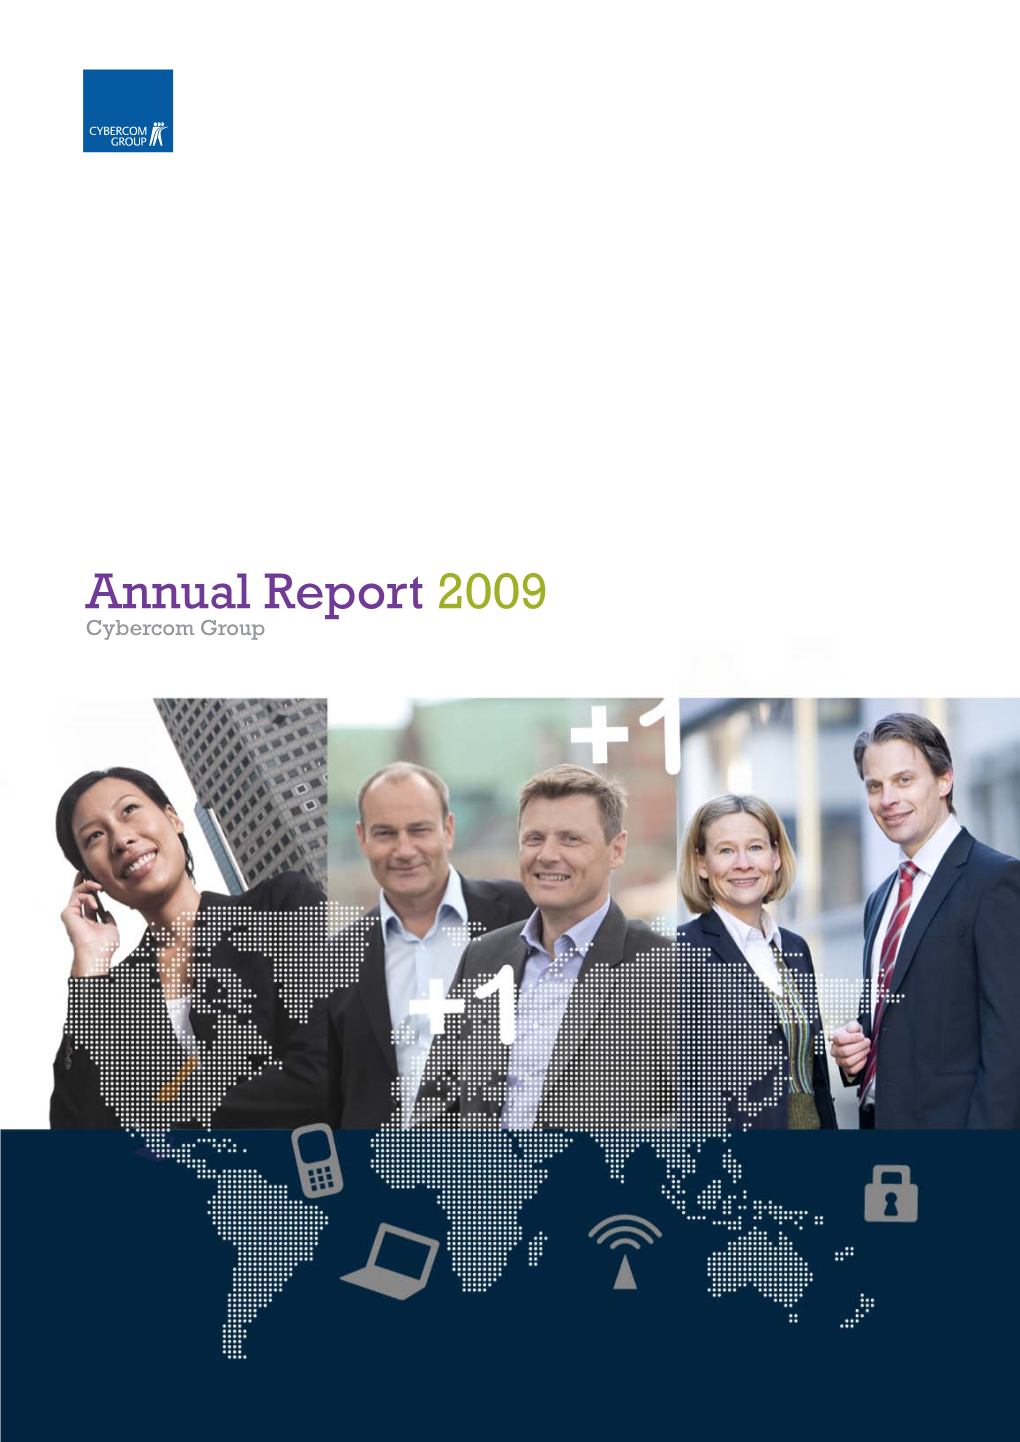 Annual Report 2009 Cybercom Group